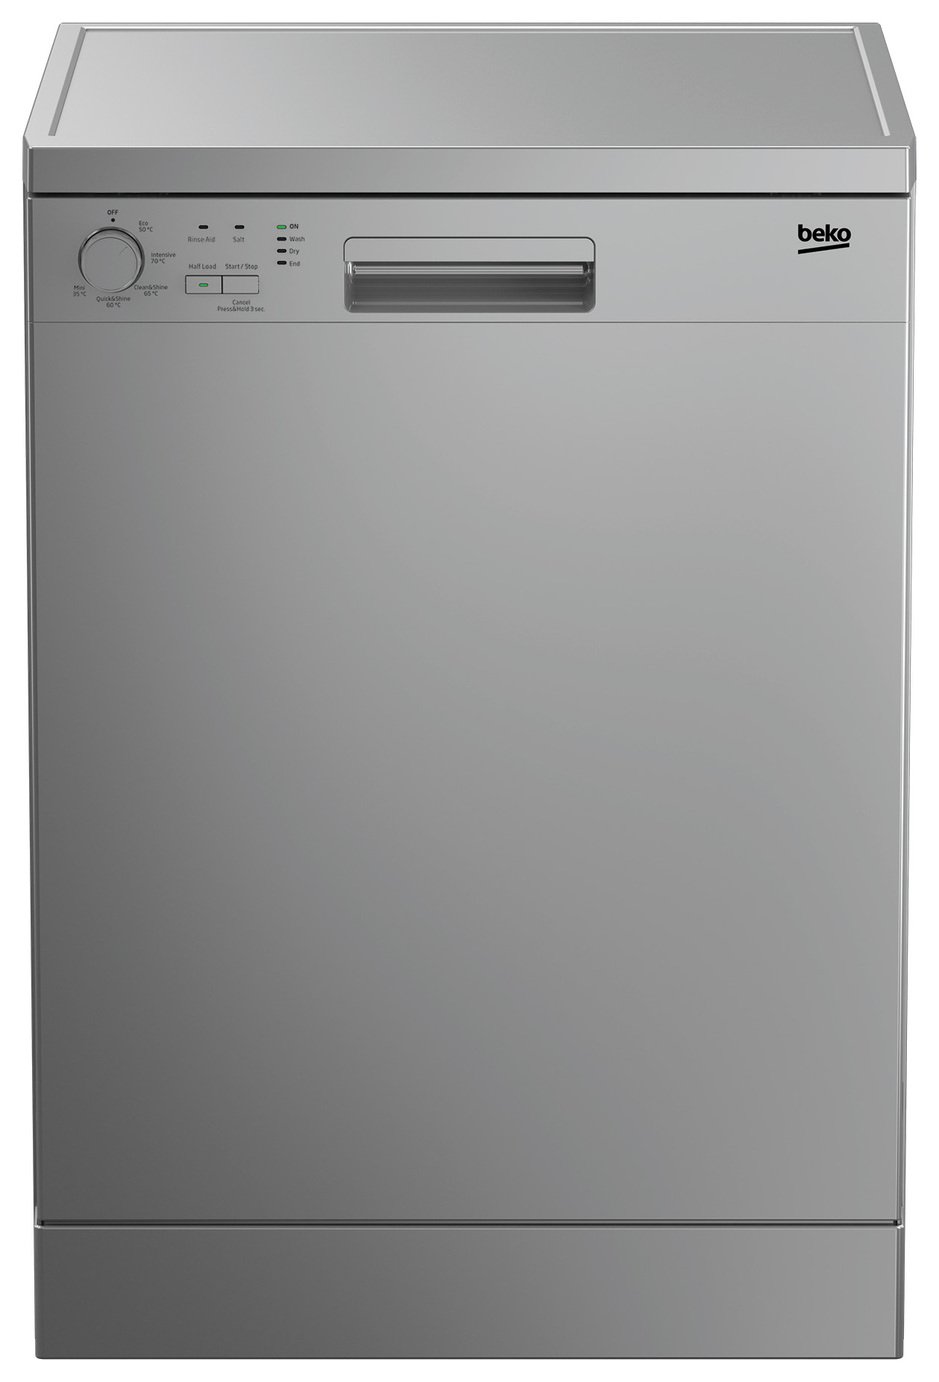 Beko DFN05310S Full Size Dishwasher - Silver